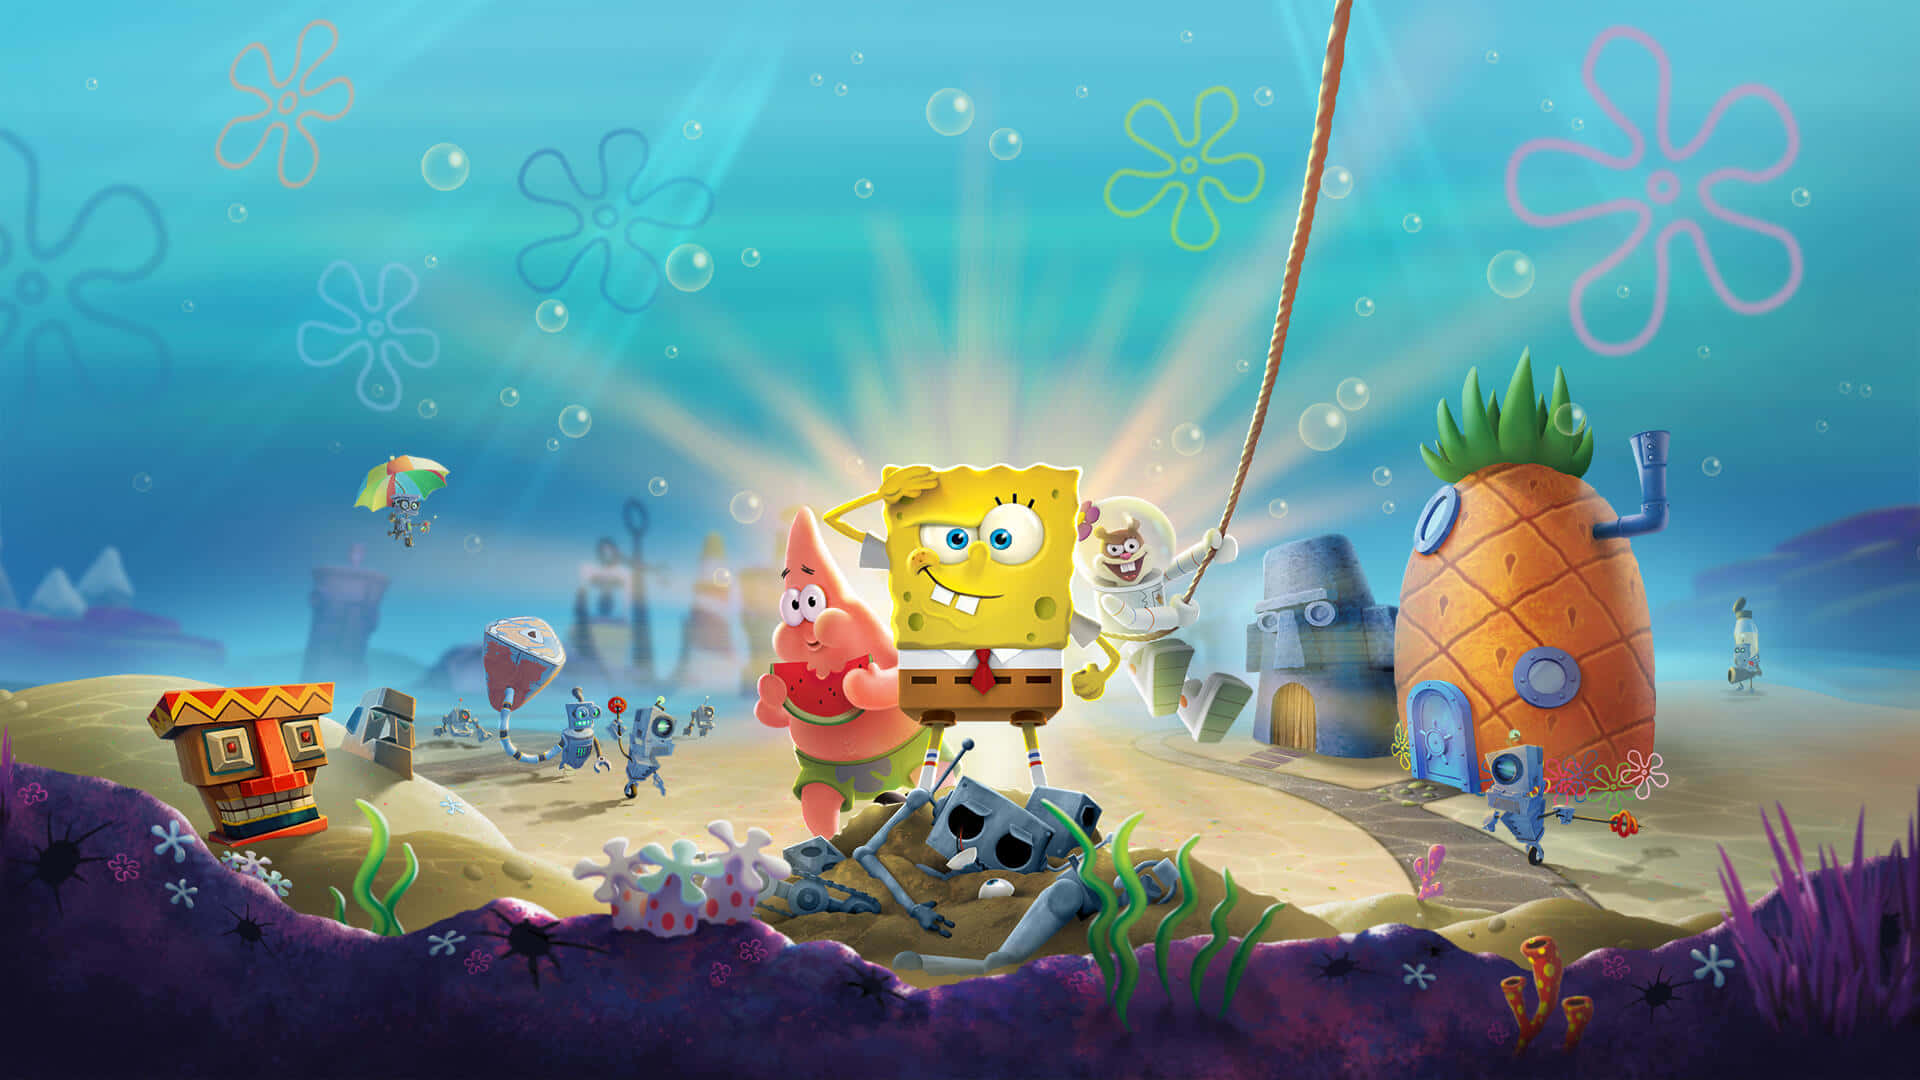 "Under the sea with Spongebob Squarepants!"